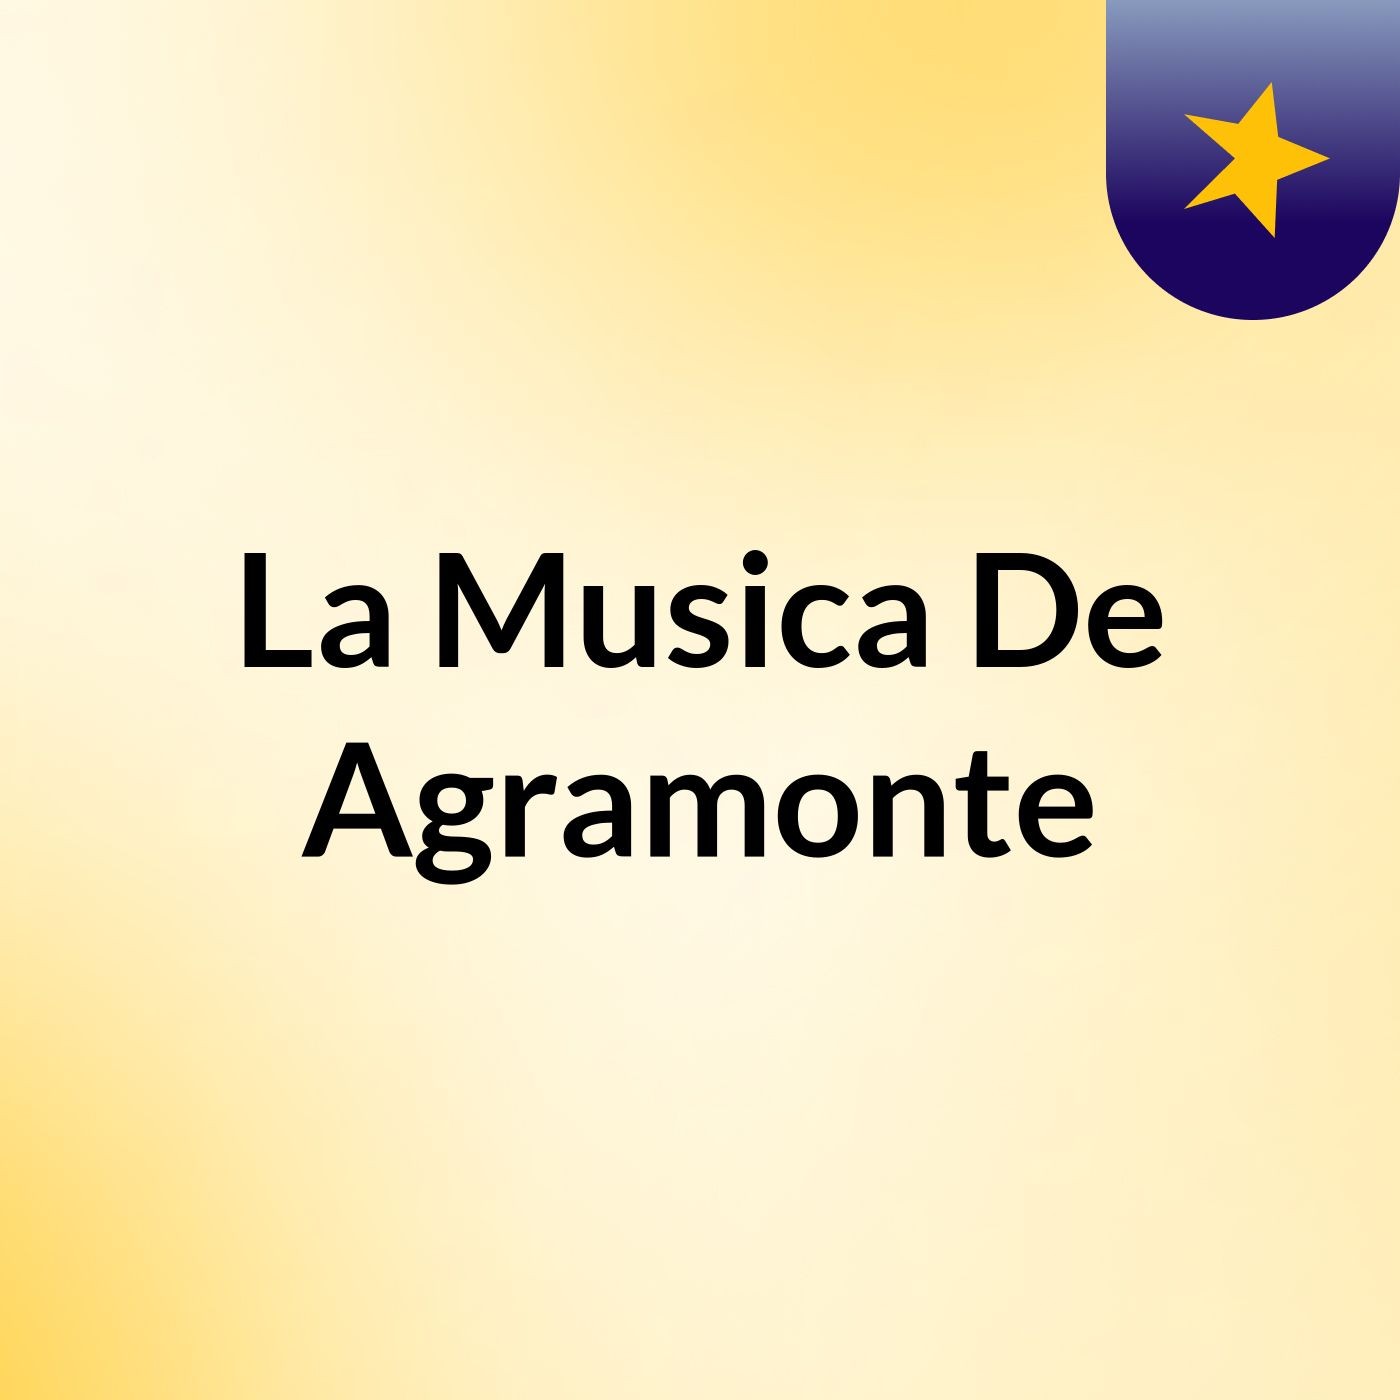 La Musica De Agramonte